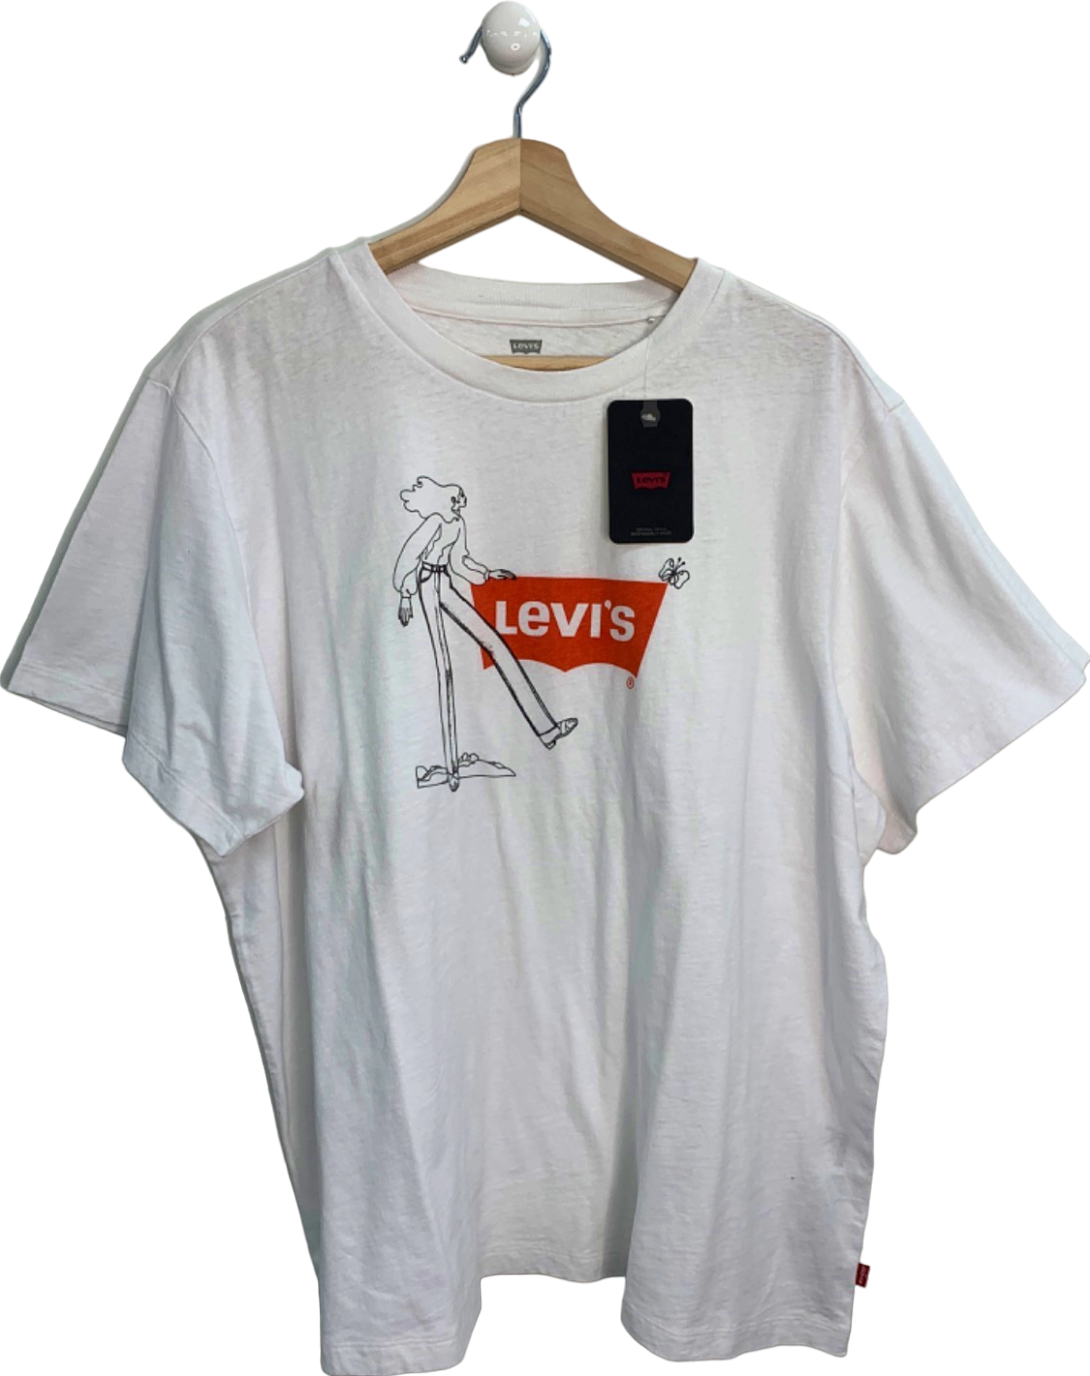 Levi's White Graphic T-Shirt with Cartoon Print XL